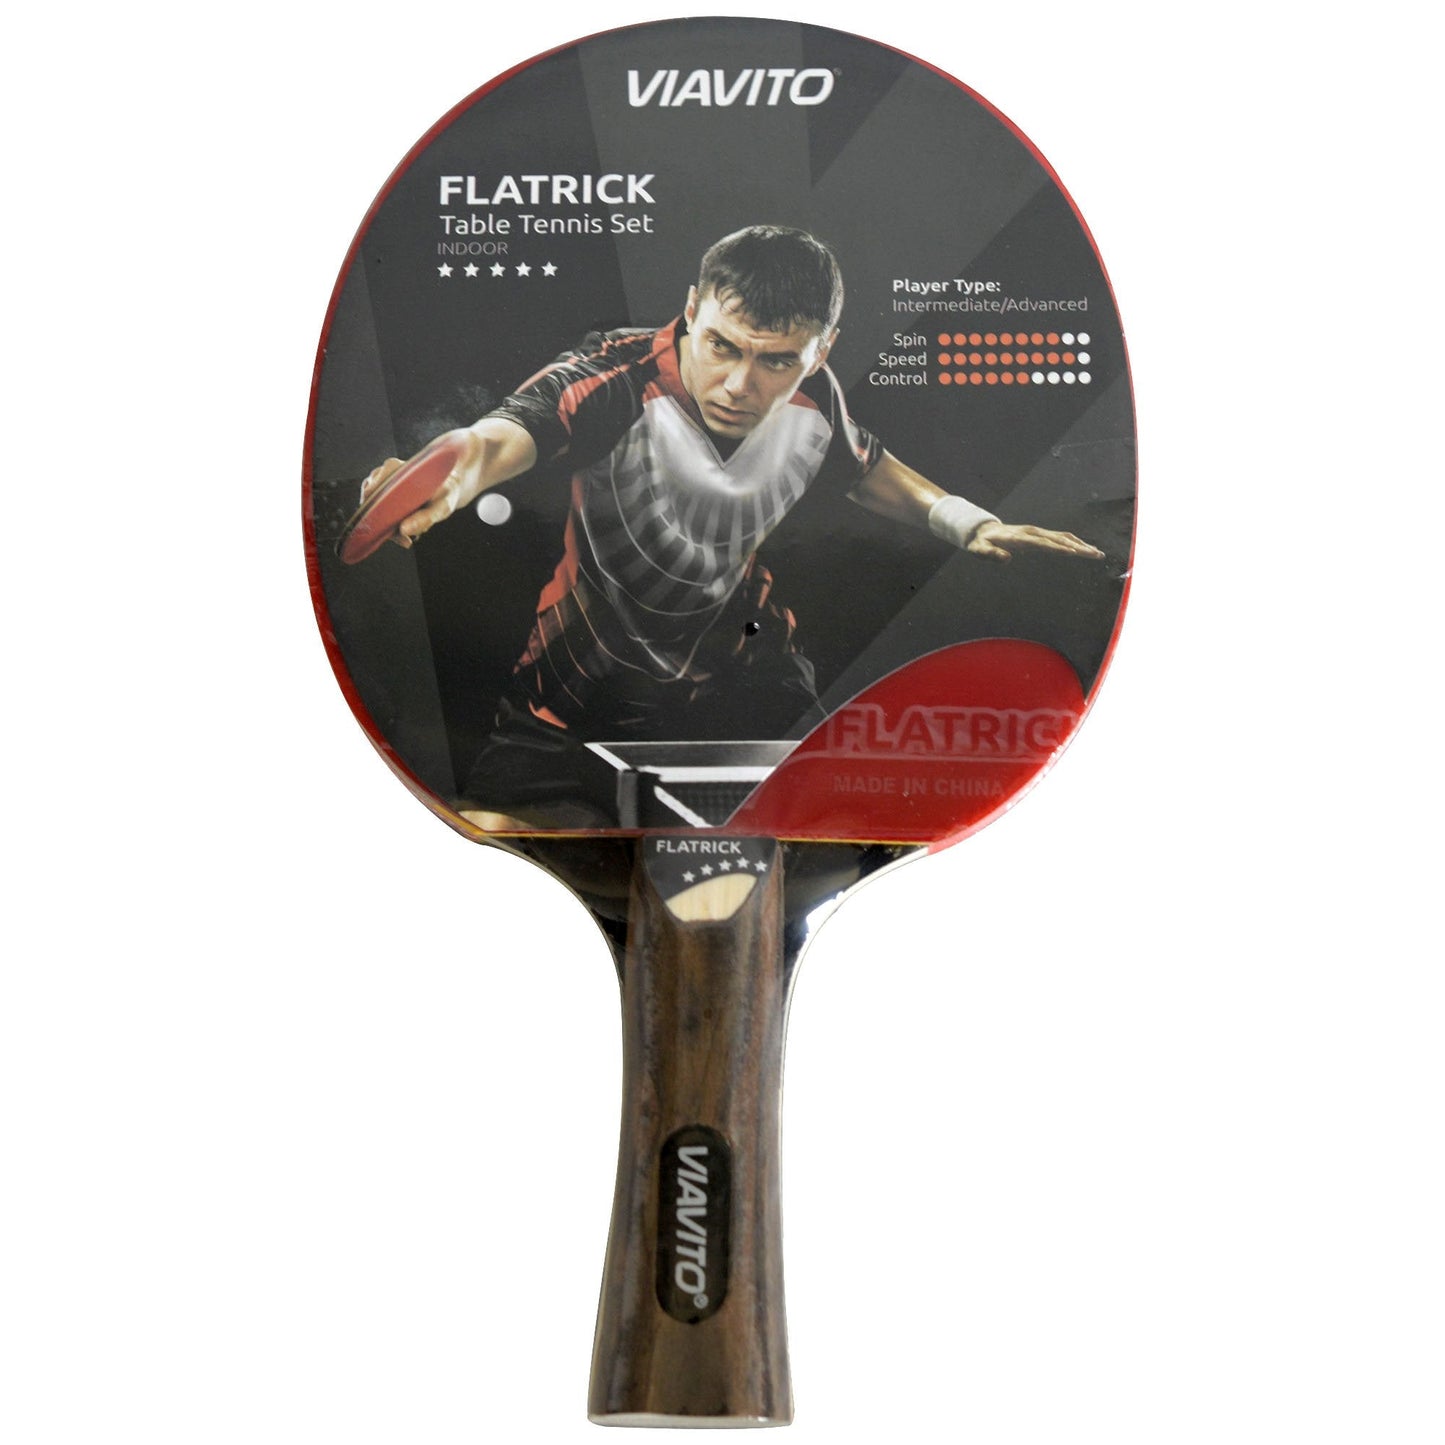 |Viavito FlaTrick Table Tennis Bat|